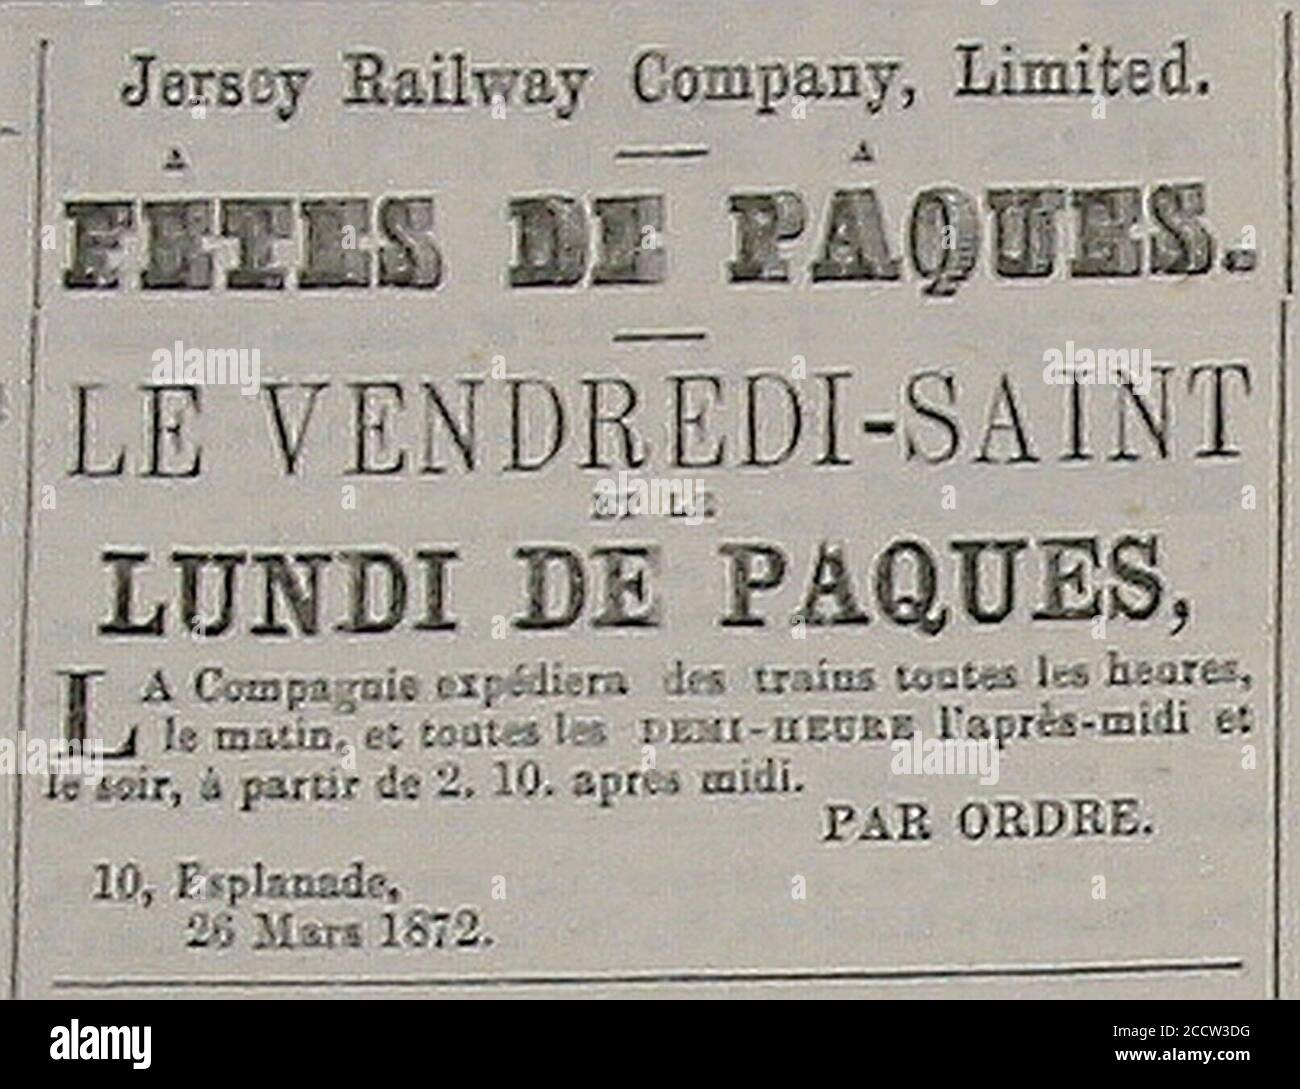 Jersey Railway Company 26 March 1872. Stock Photo